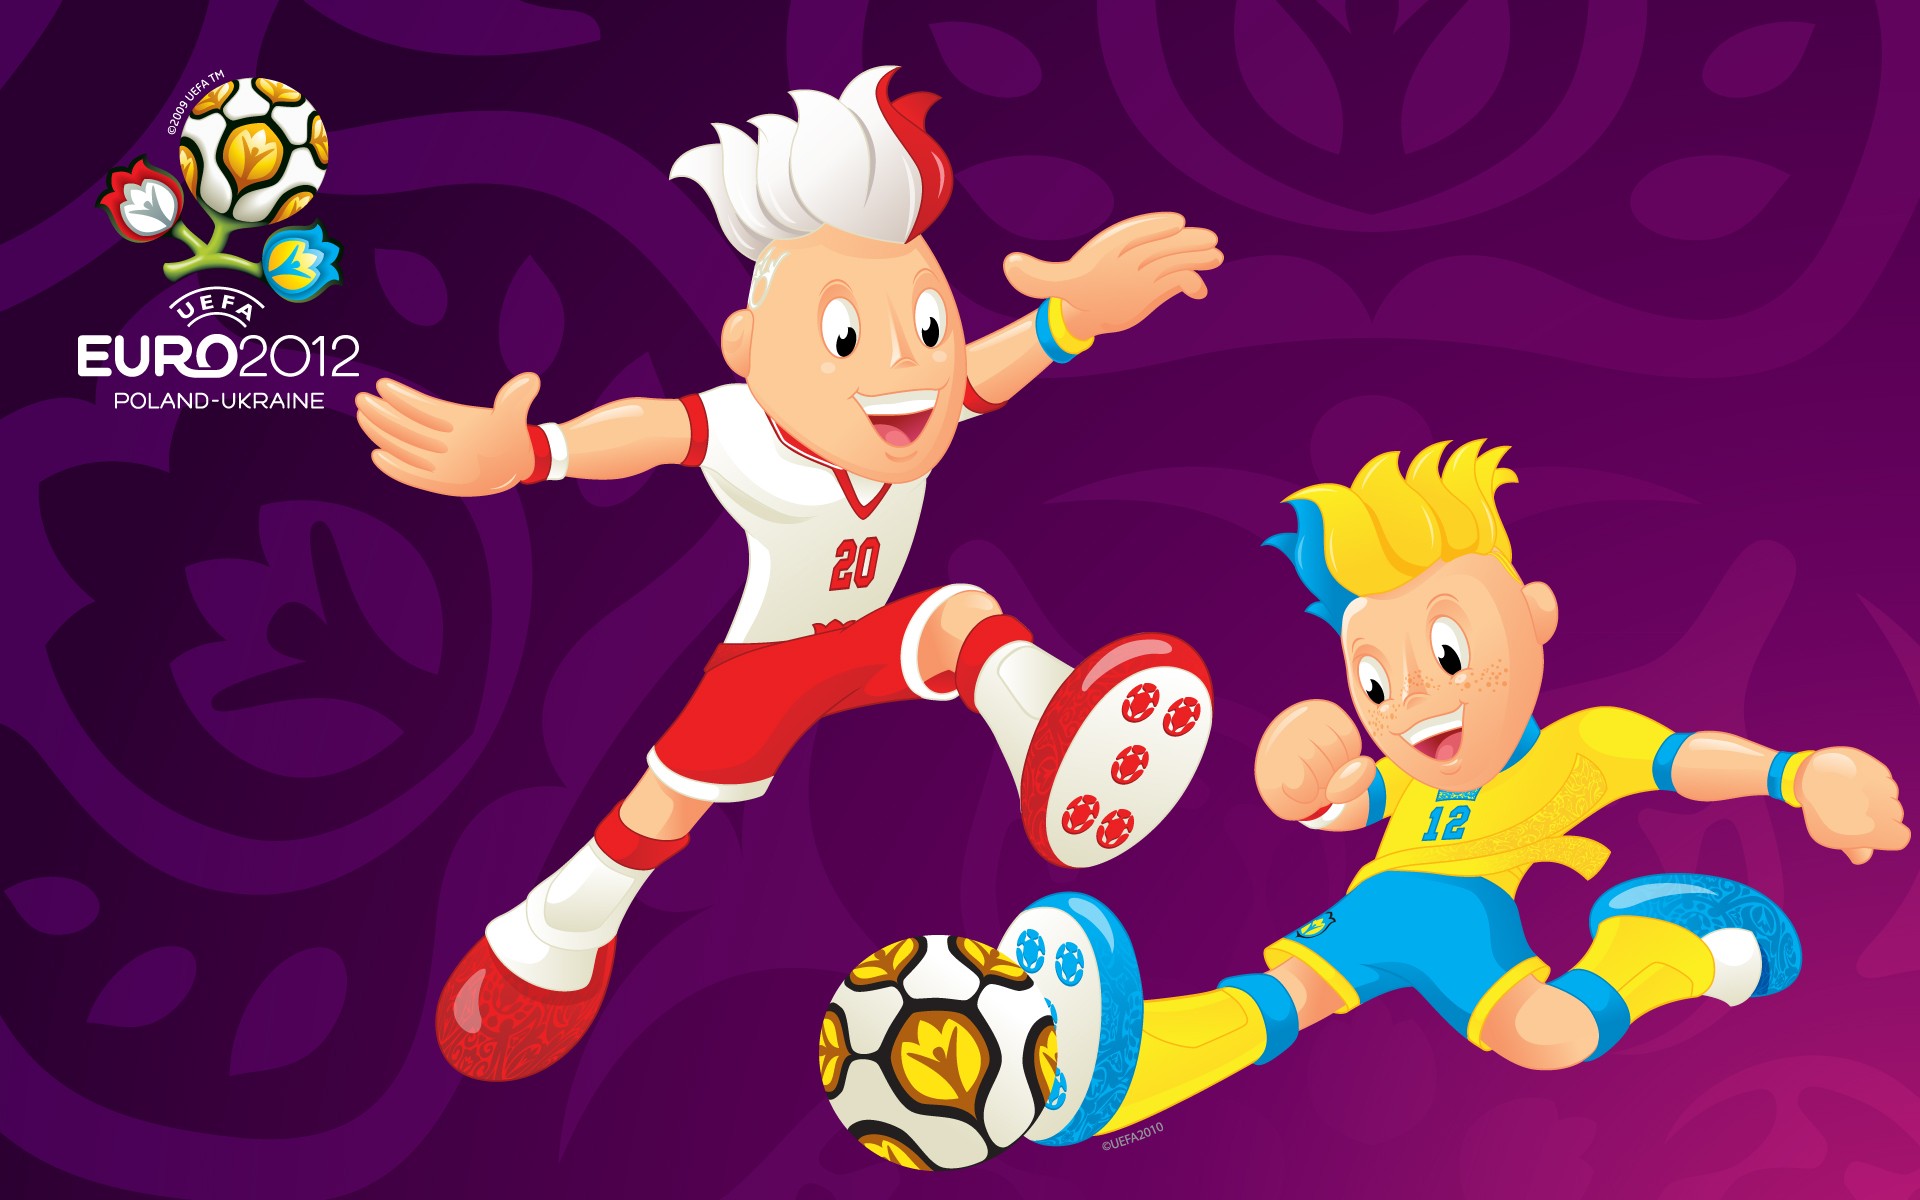 UEFA Euro 2012 Mascots Paying Game